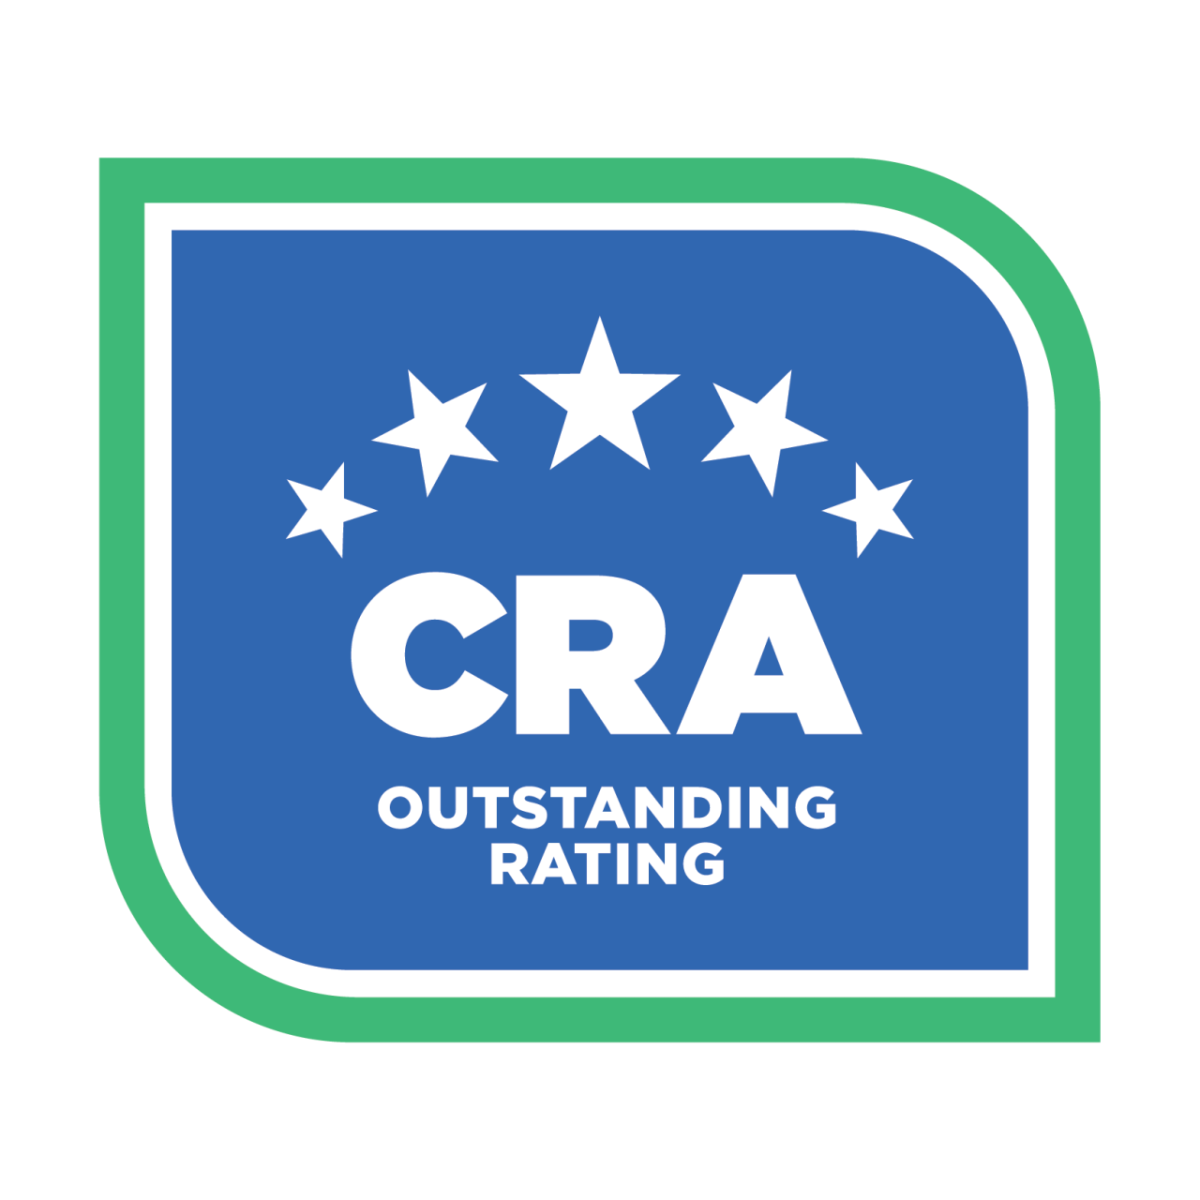 CRA outstanding rating logo